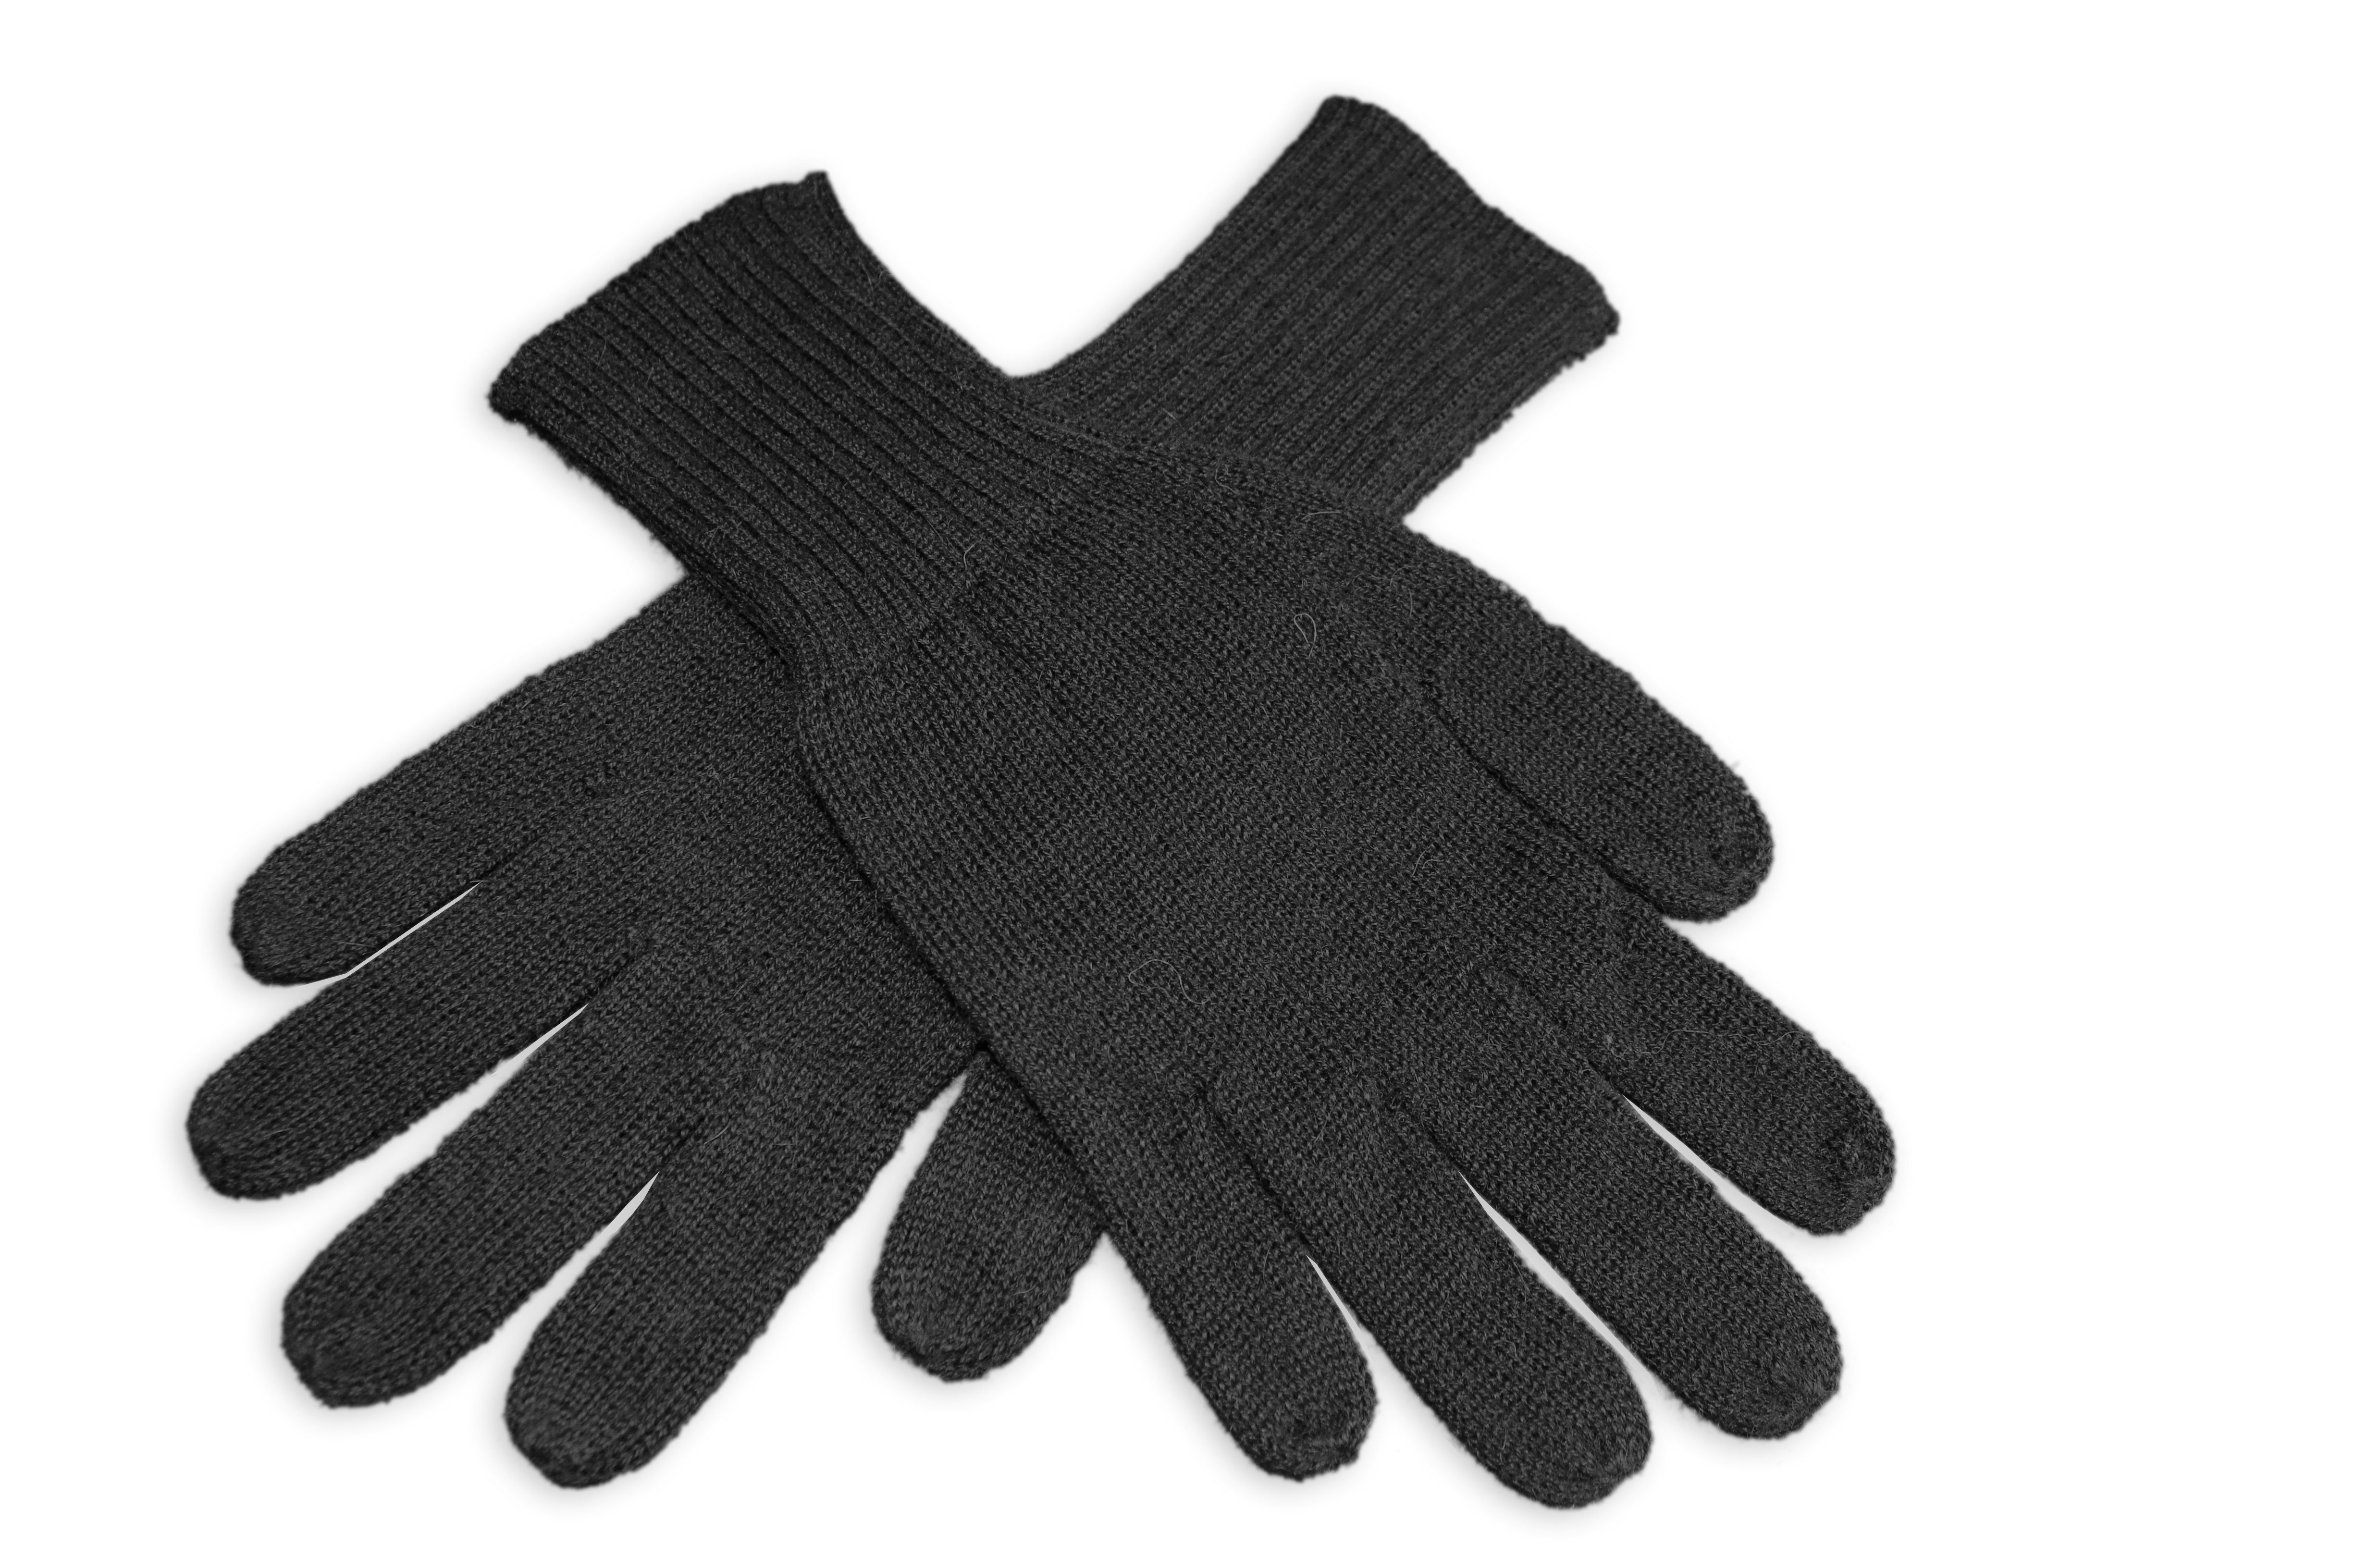 Posh Gear Strickhandschuhe Guantino Alpaka Fingerhandschuhe aus 100% Alpakawolle schwarz | Wollhandschuhe